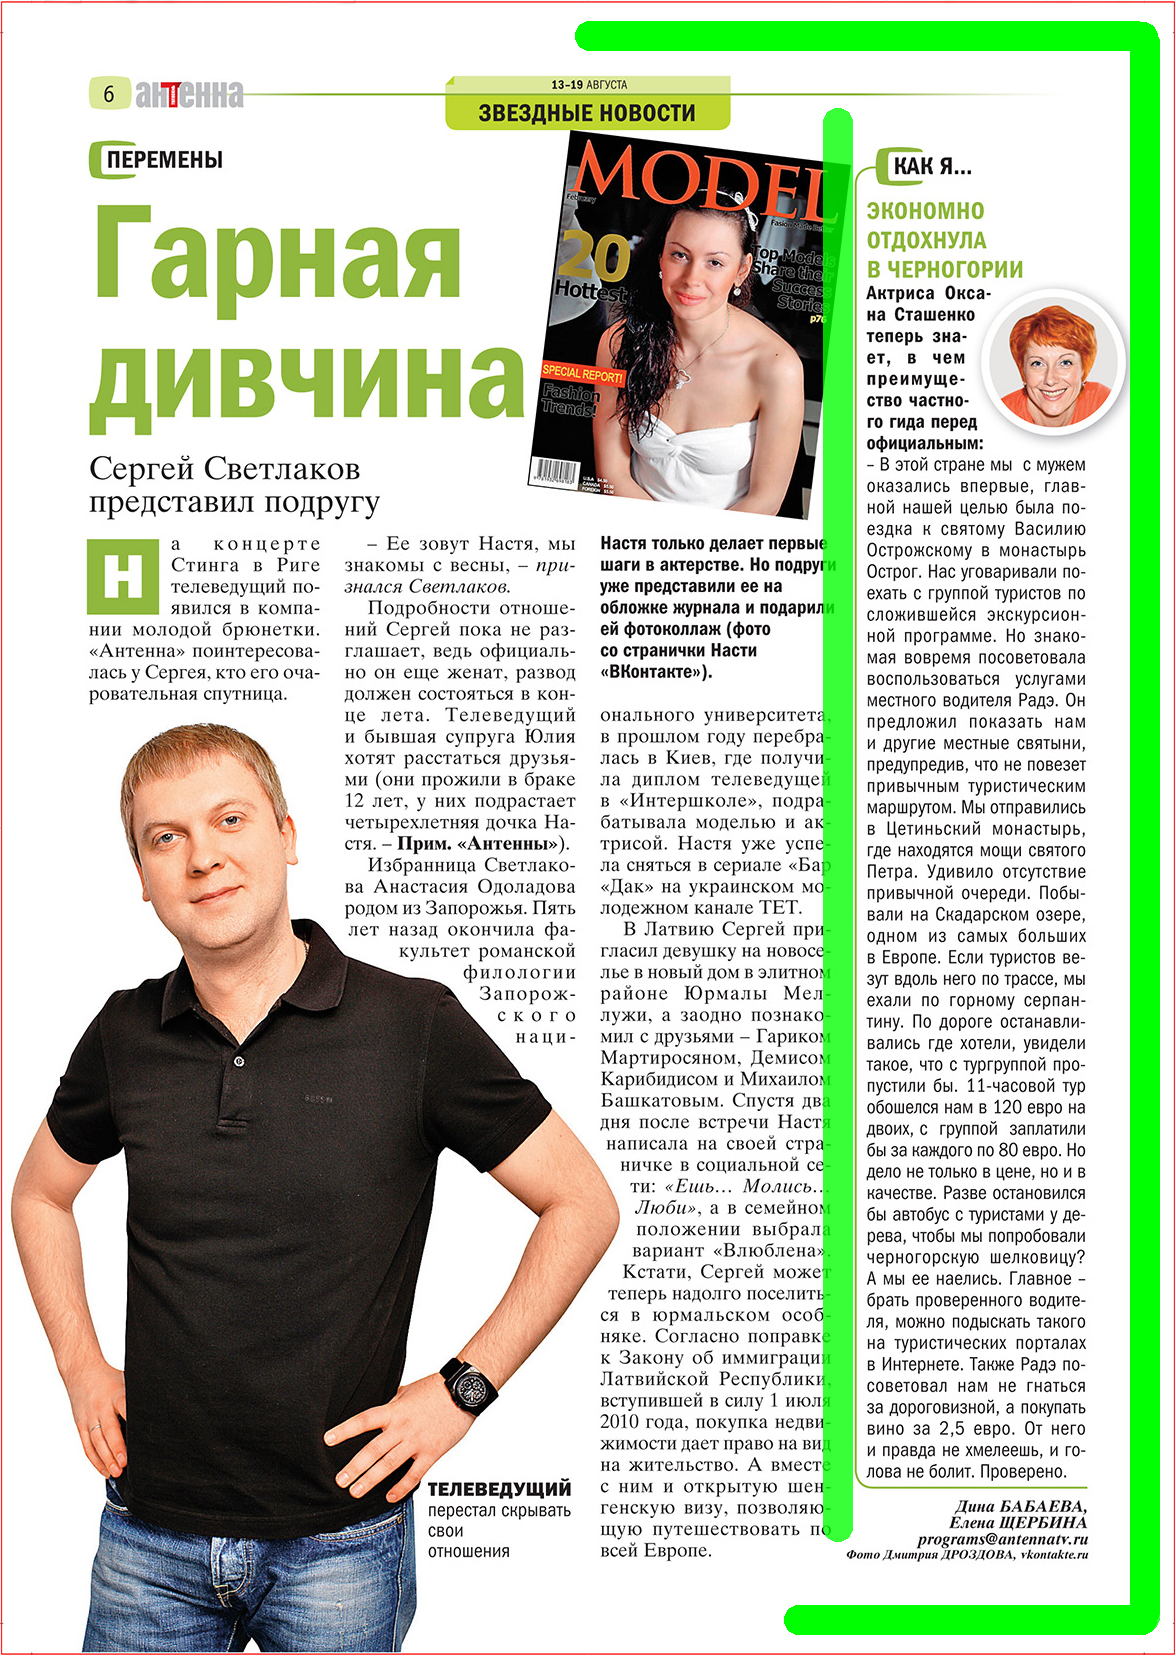 Оксана Сташенко в журнале Антенна 08 августа 2012 года